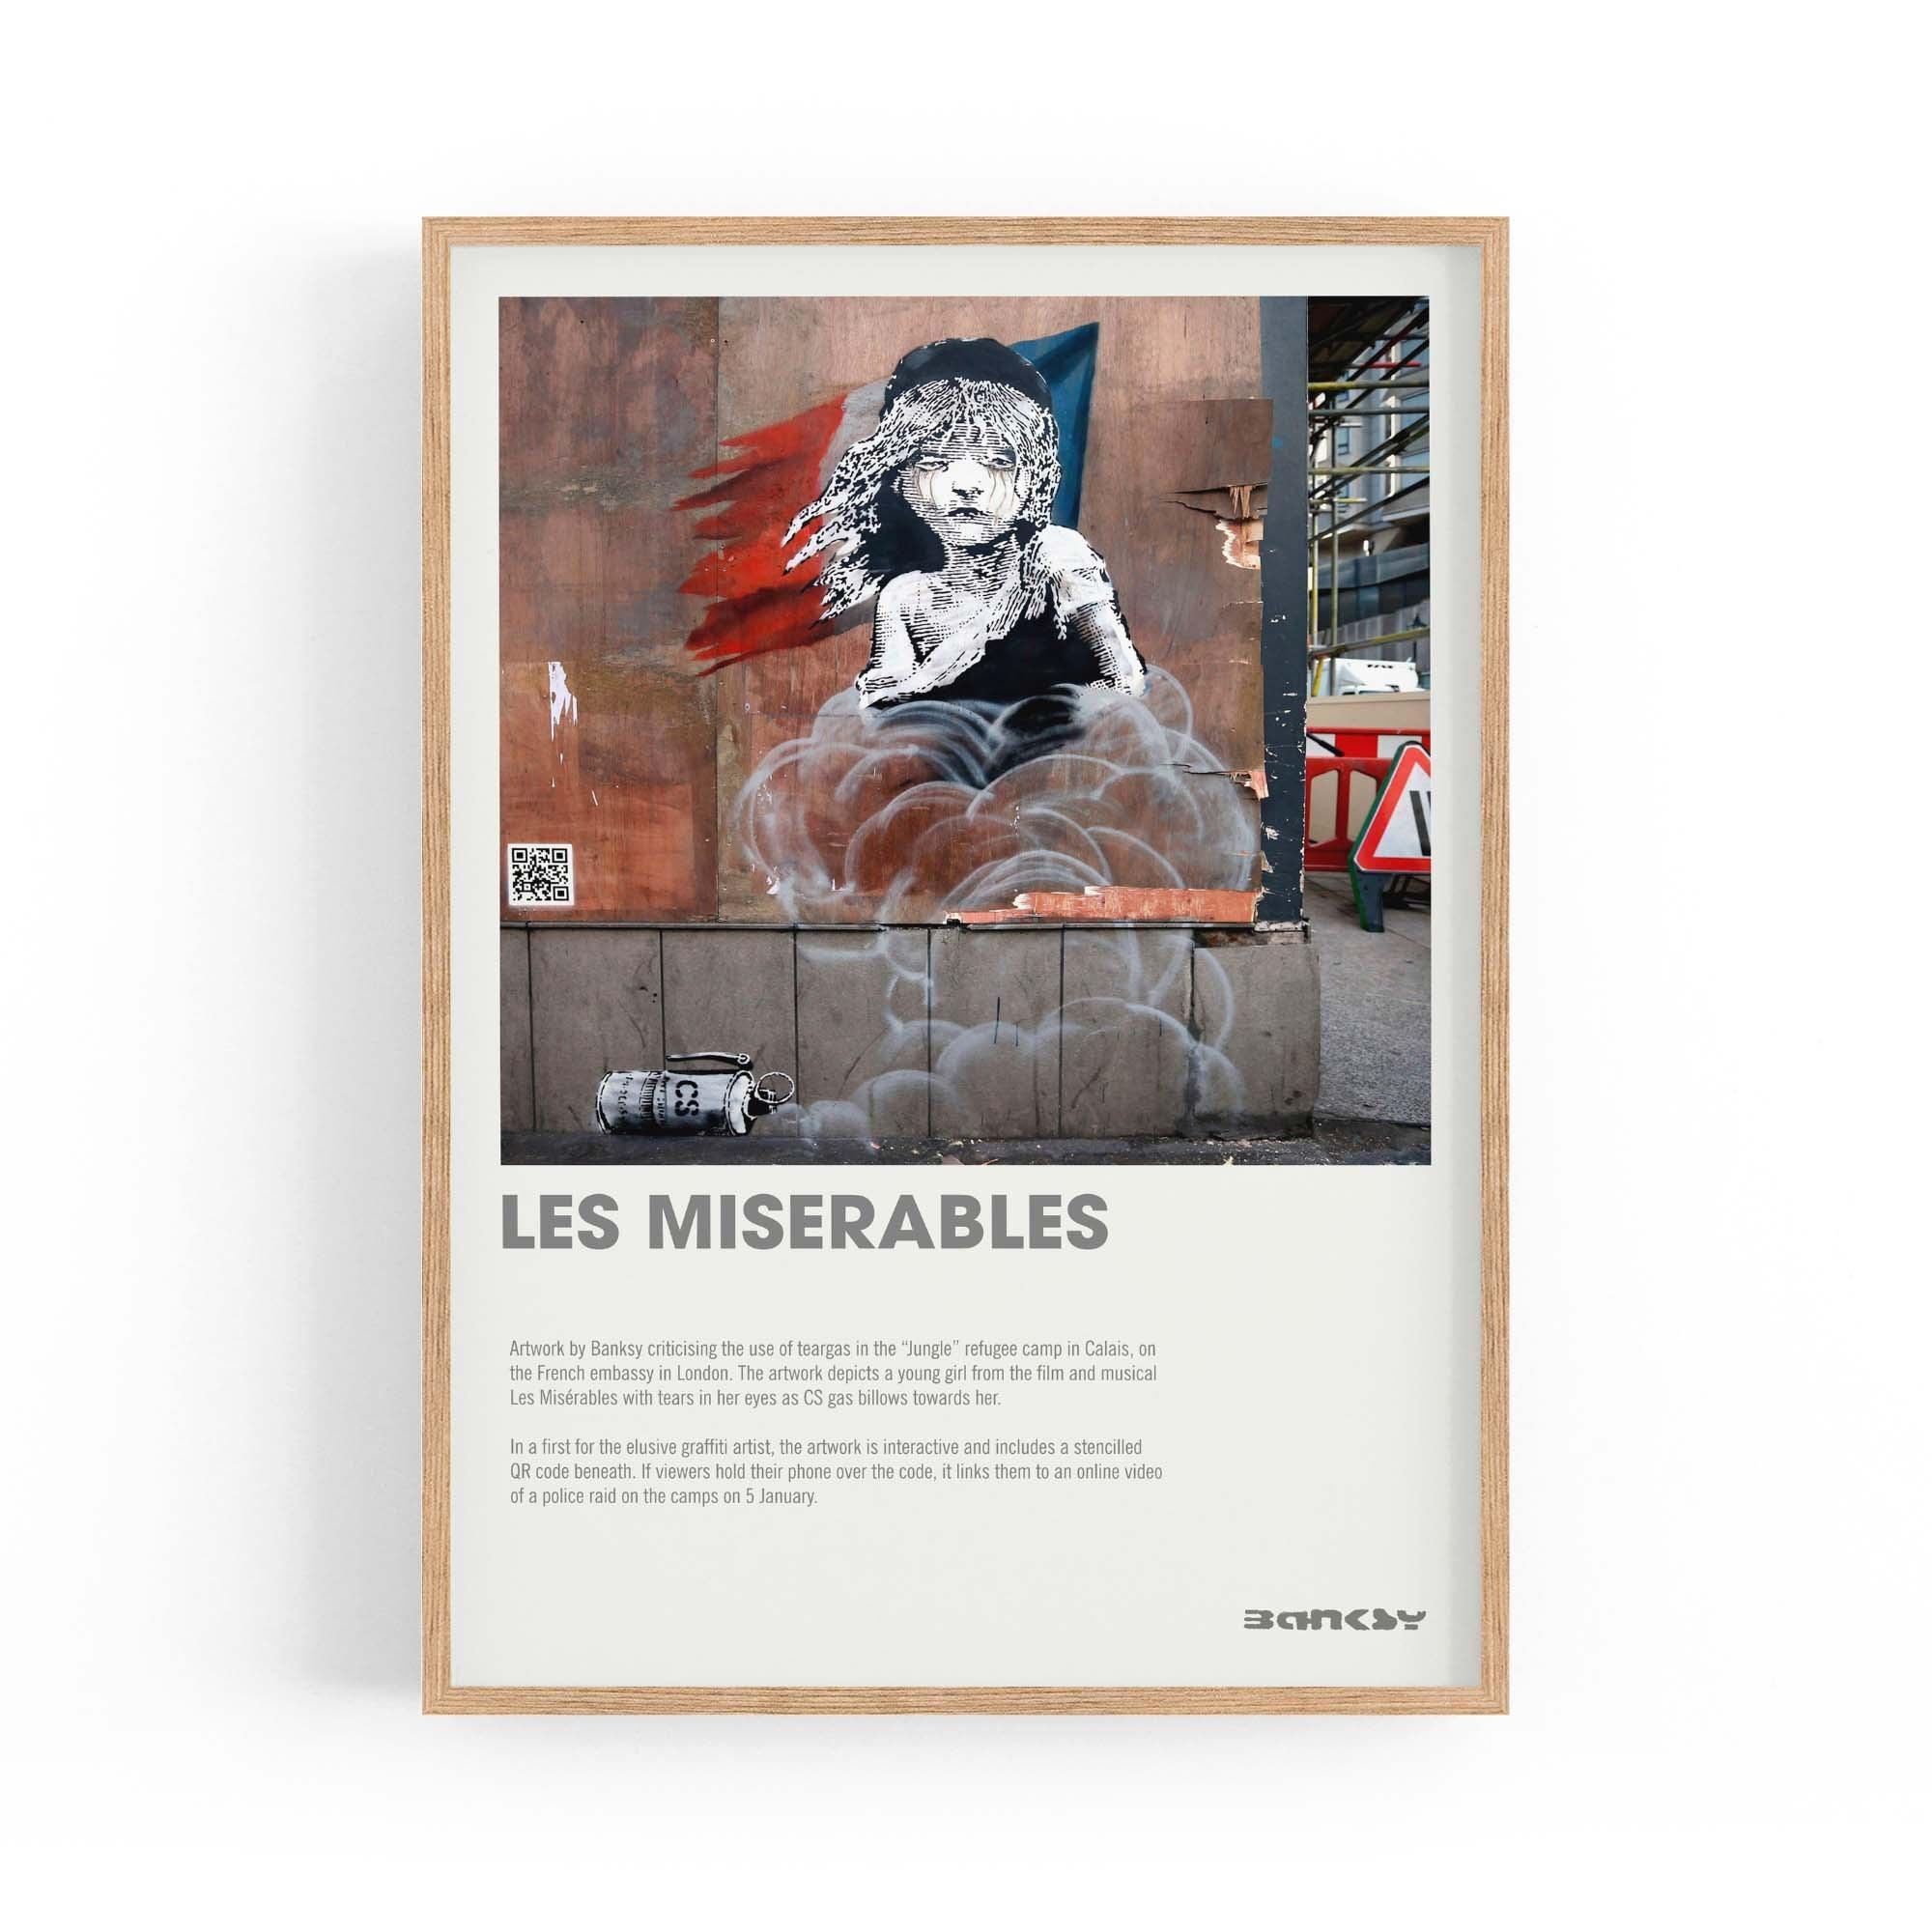 Banksy "Les Miserables" Graffiti Gallery Wall Art: Poster Print, Canvas or Framed